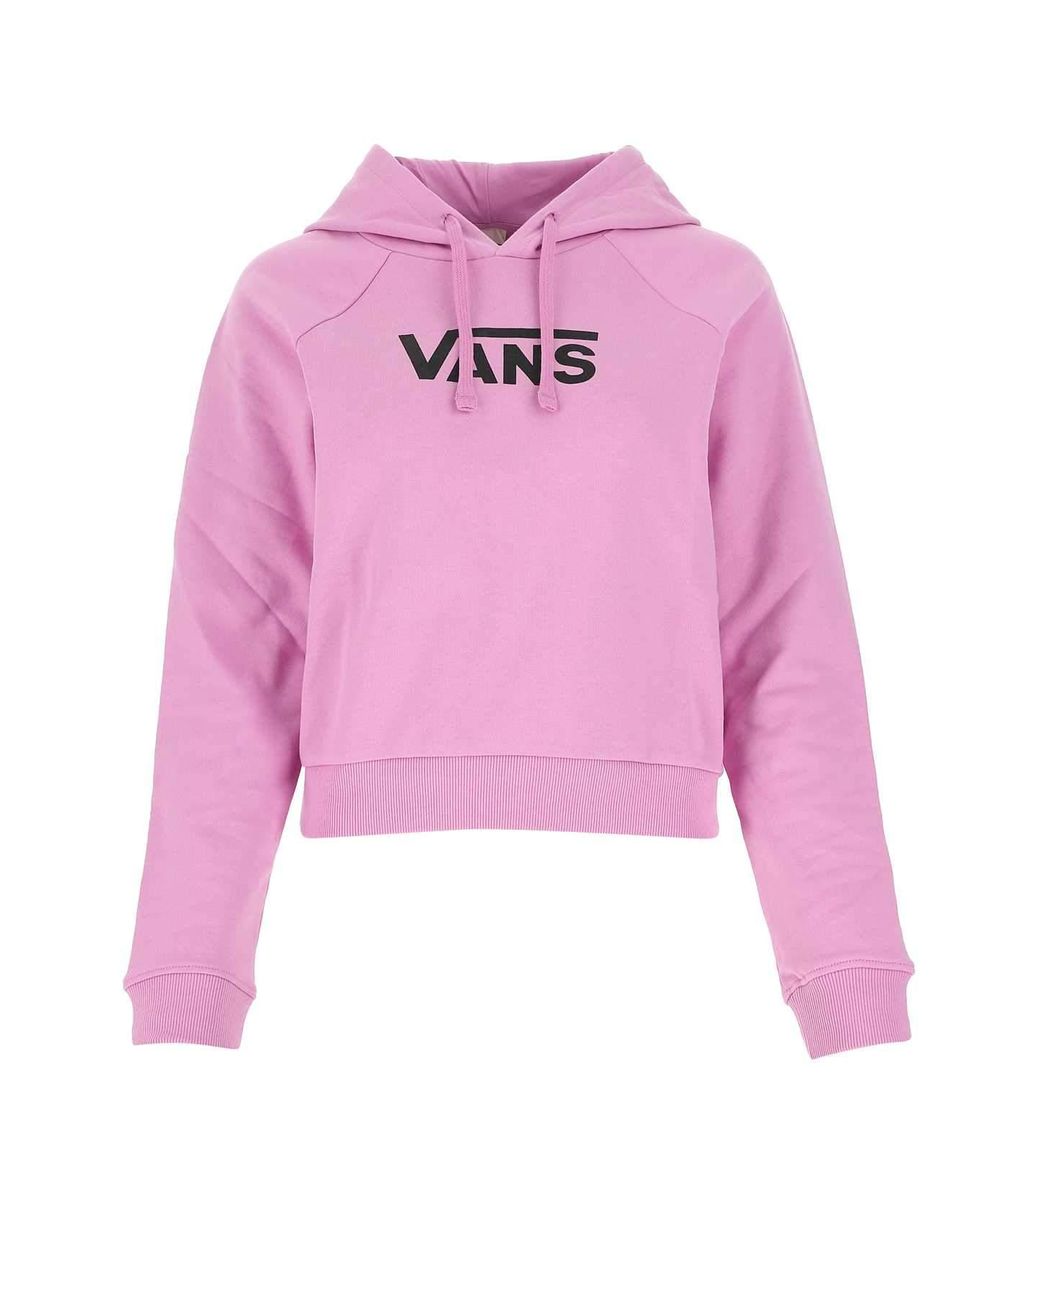 Vans Cotton Logo Drawstring Hoodie in Pink - Lyst